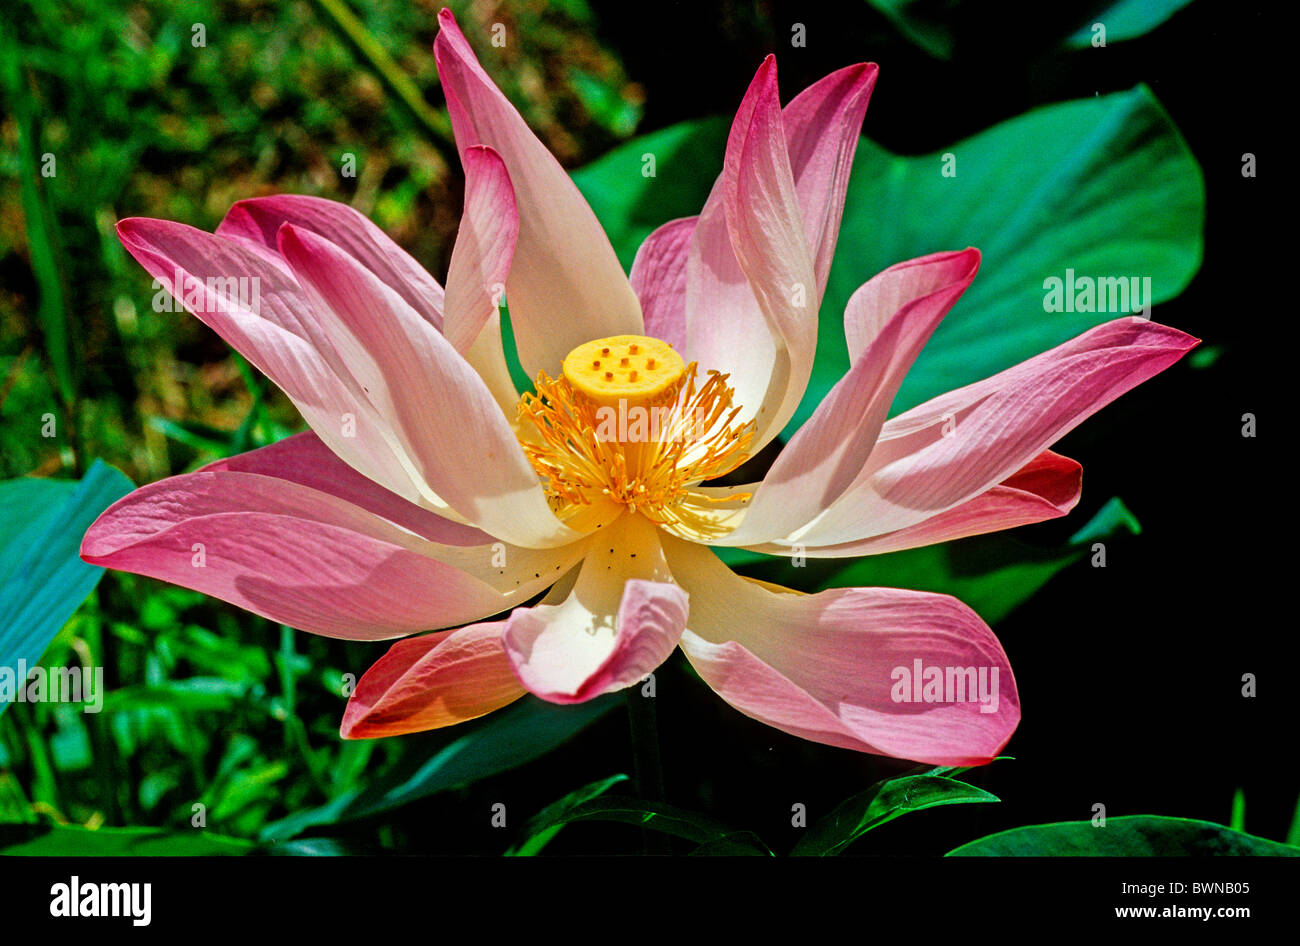 blauer Lotus indische heilige Lotus Nelumbo Nucifera Lotus Wasser  Lotuspflanze Nynphaeaceae Pflanze Pflanzen Blume flo Stockfotografie - Alamy